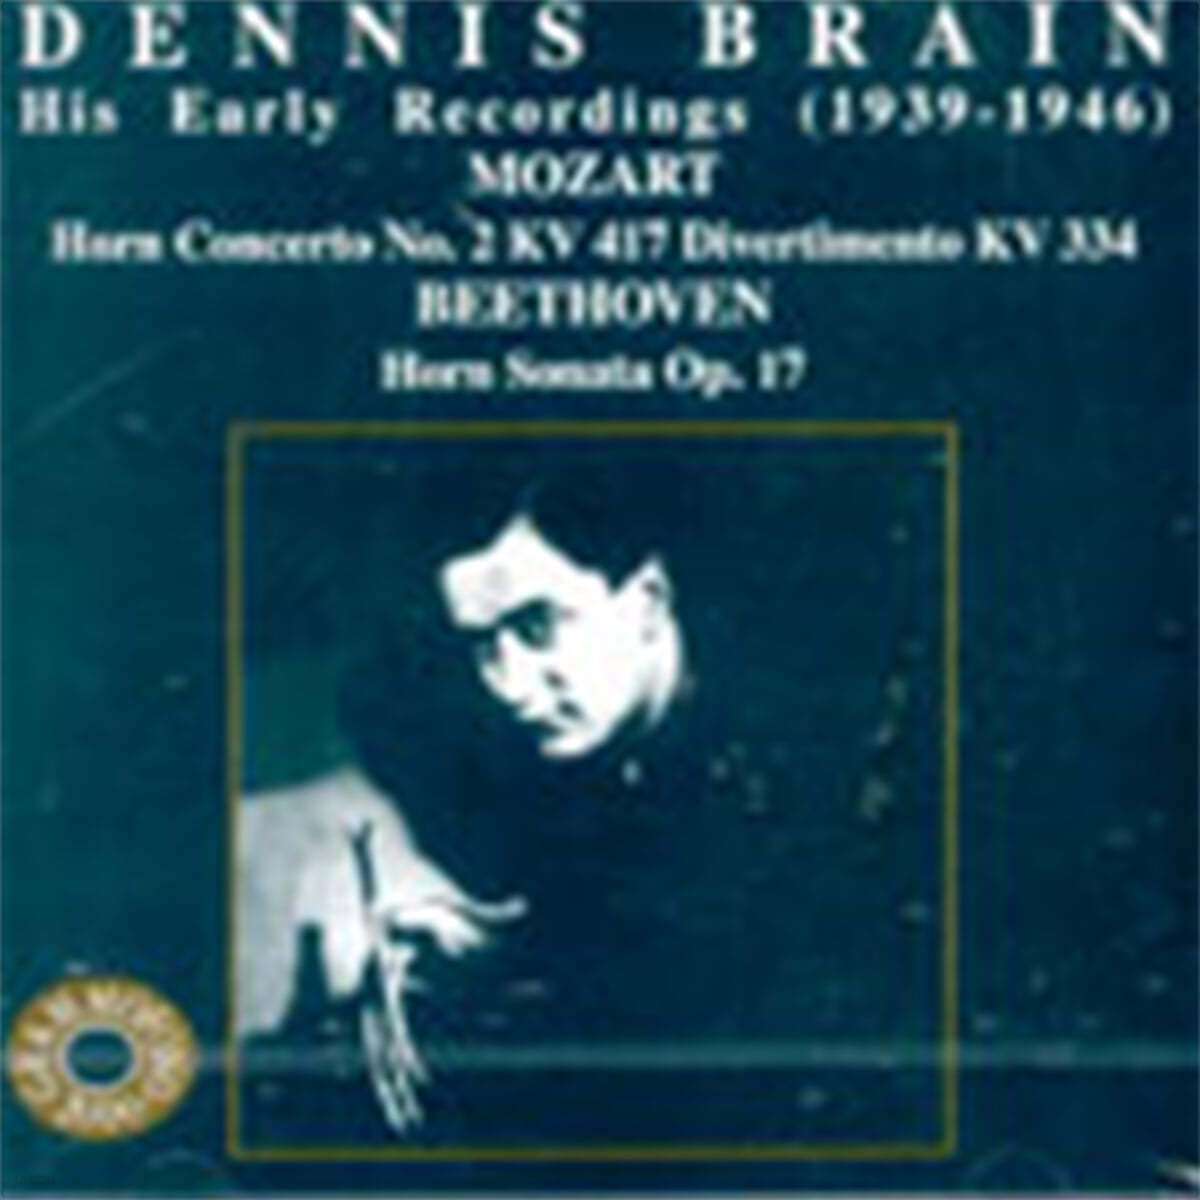 Dennis Brain 모차르트: 호른 협주곡 / 베토벤: 호른 소나타 (Mozart: Horn Concerto K.417 / Beethoven: Horn Sonata Op.17) 